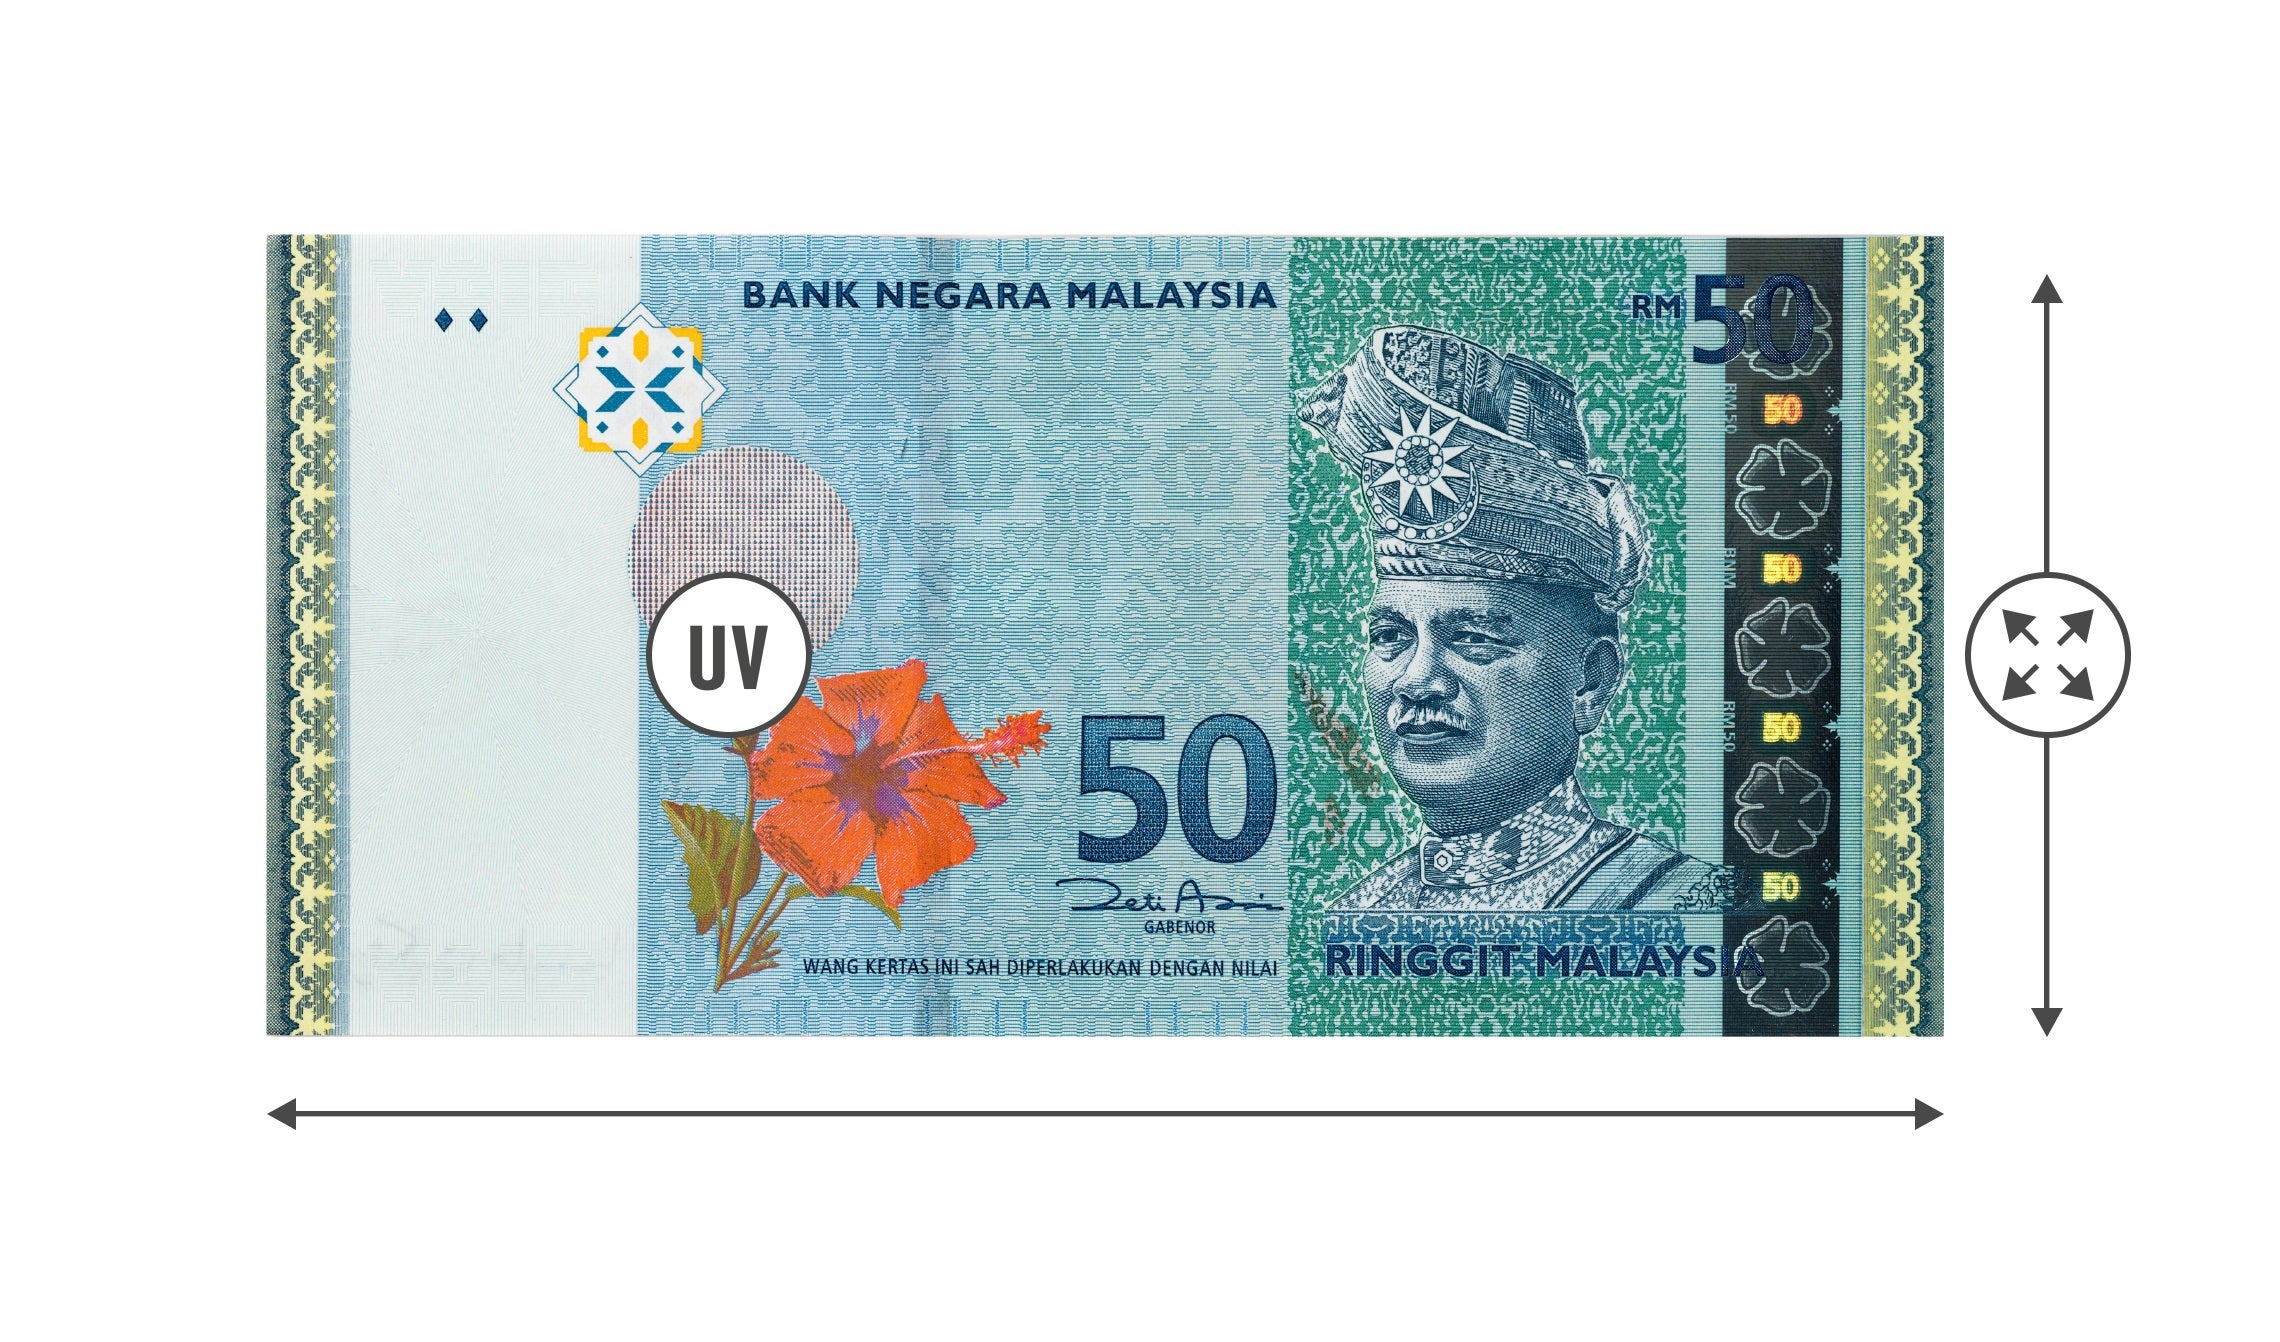 safescan-2610-banknote-counter